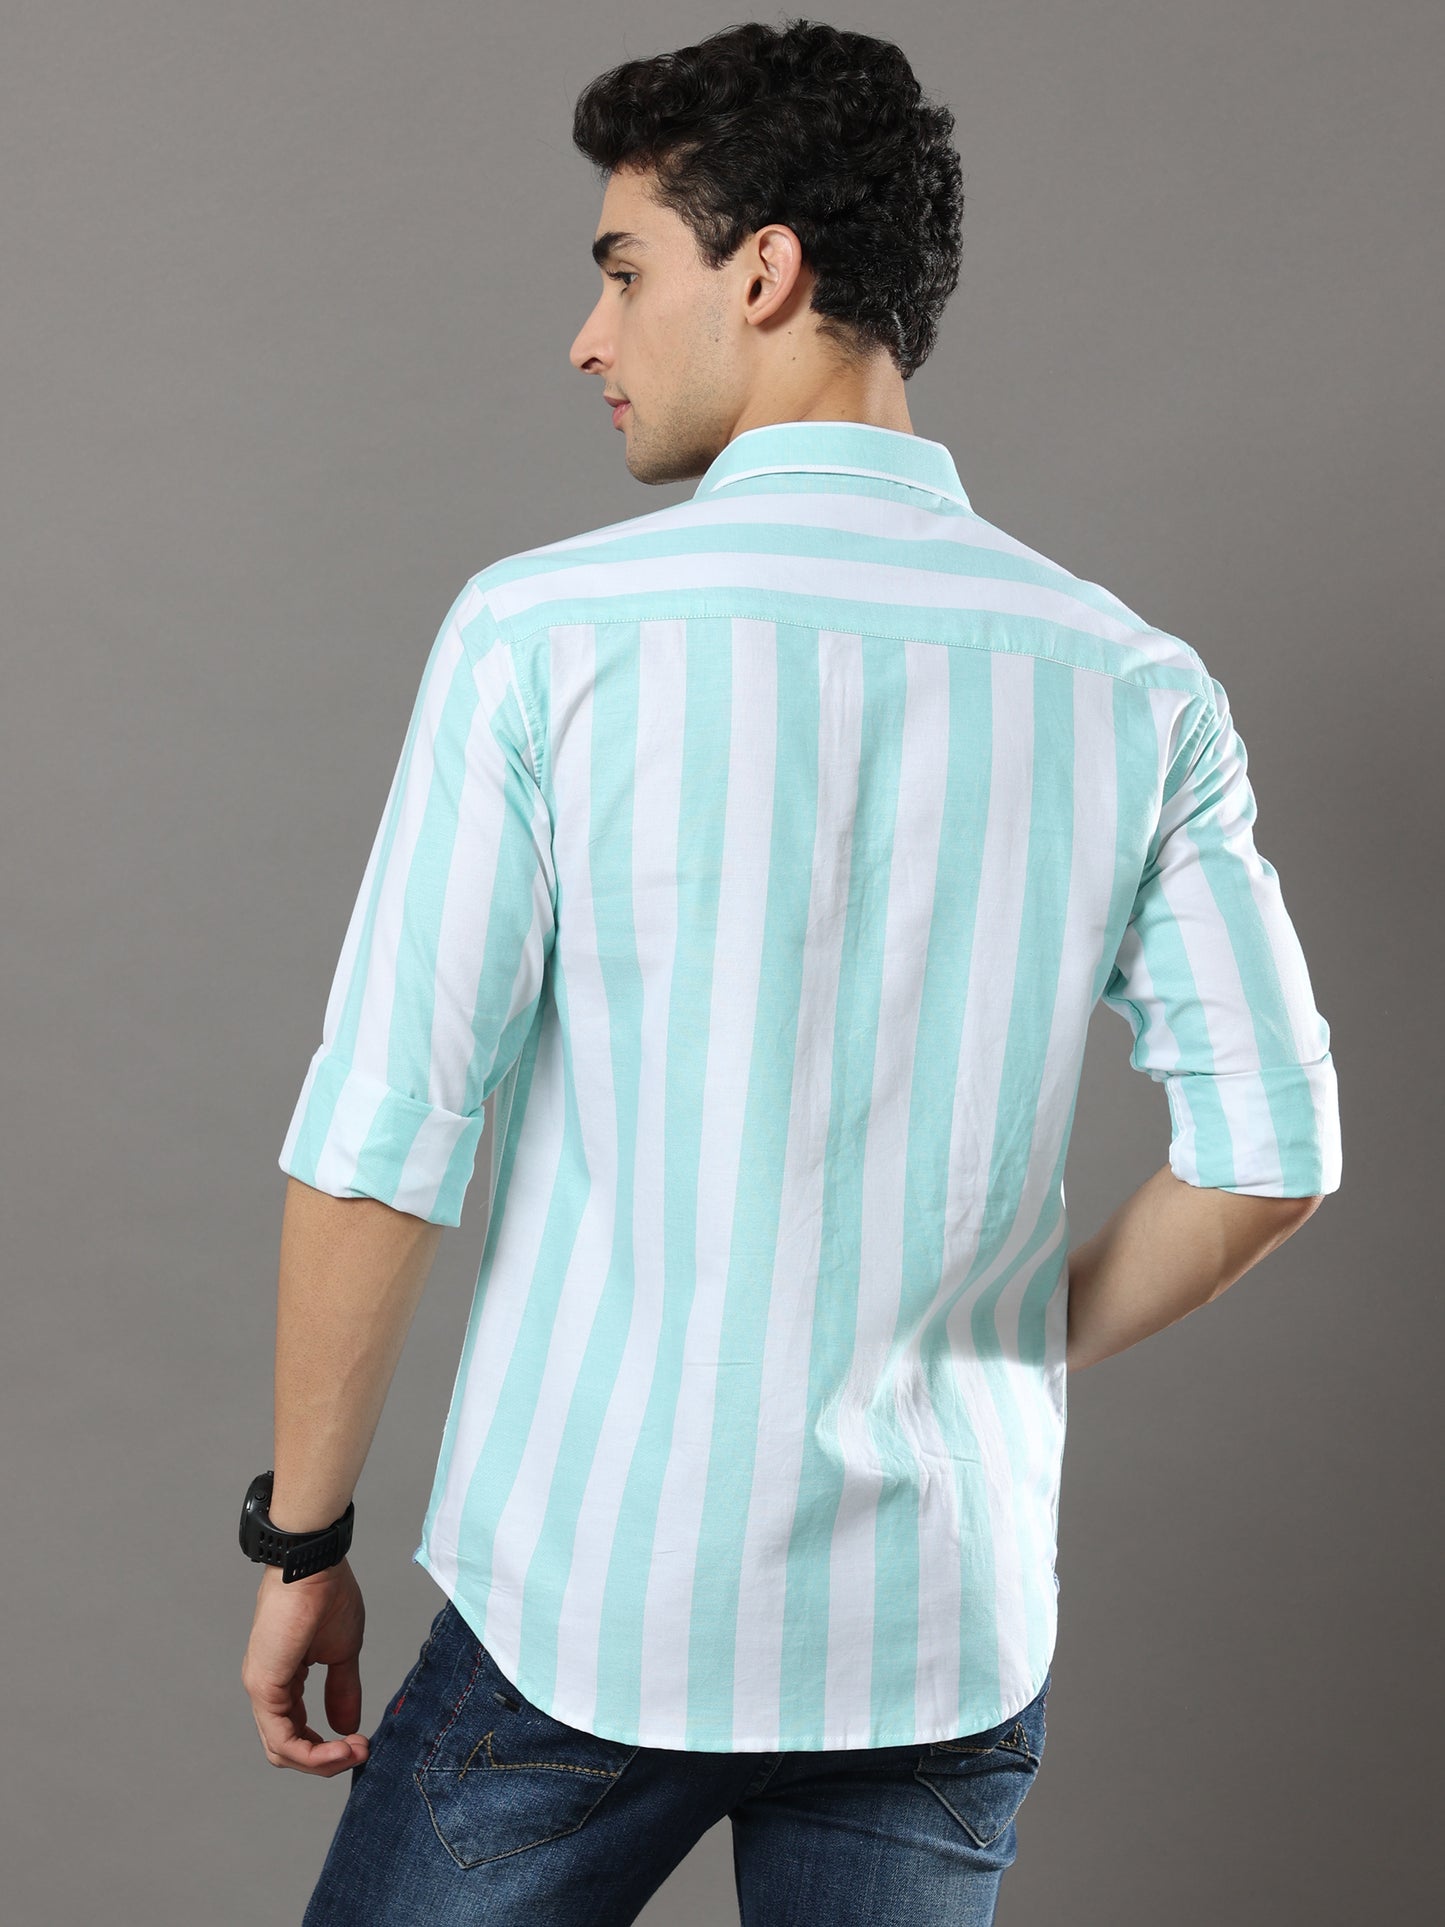 Sea Green And White Stripes Shirt